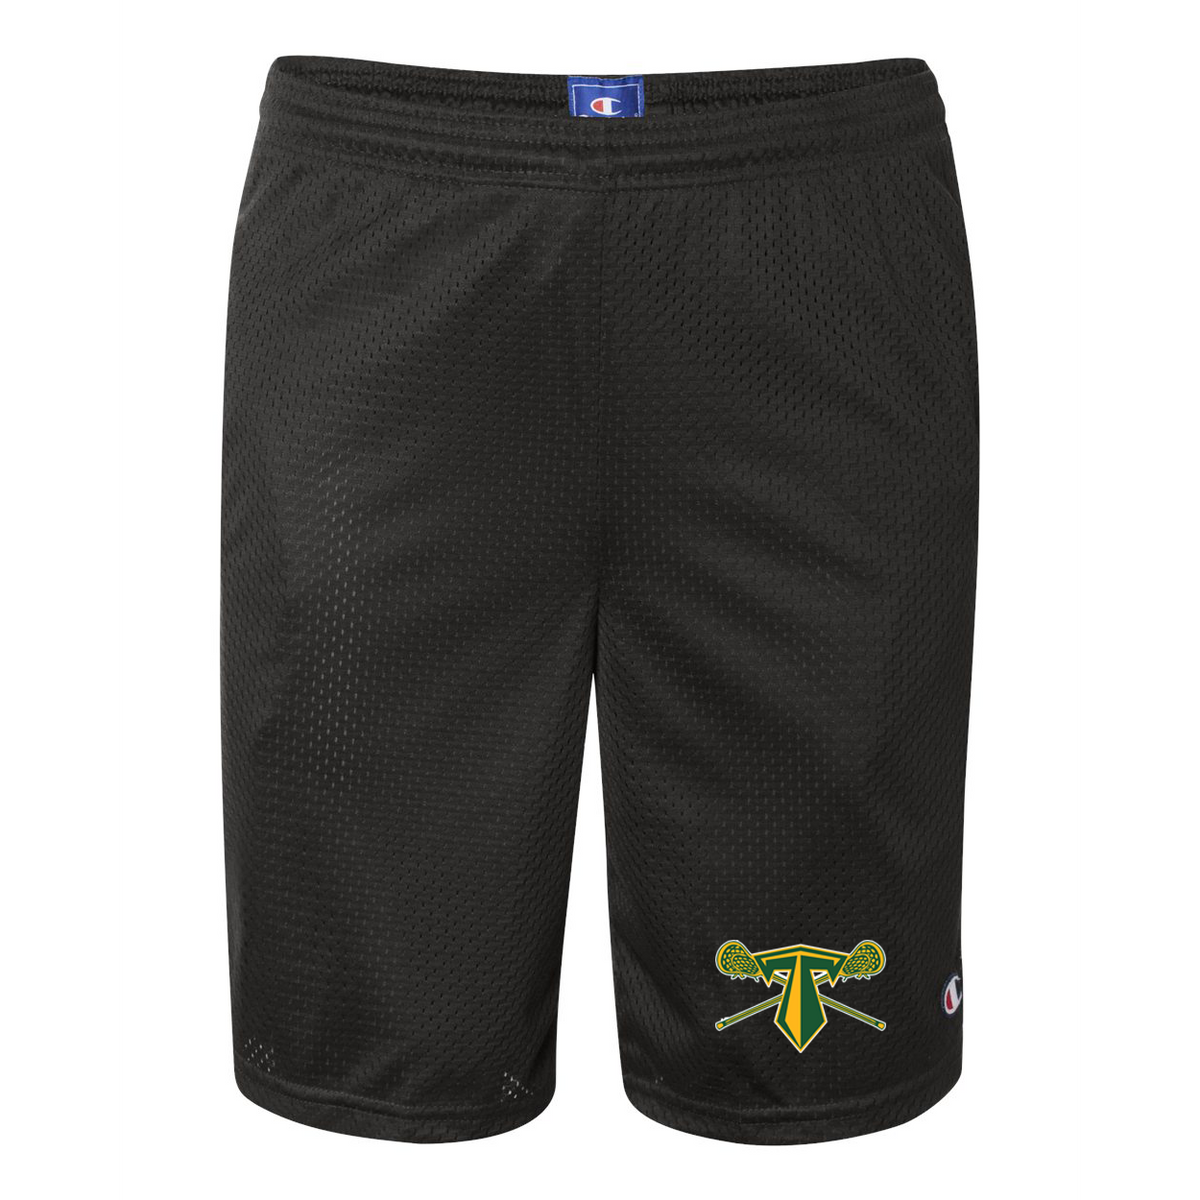 Lynbrook PAL Lacrosse Champion Mesh Shorts with Pockets